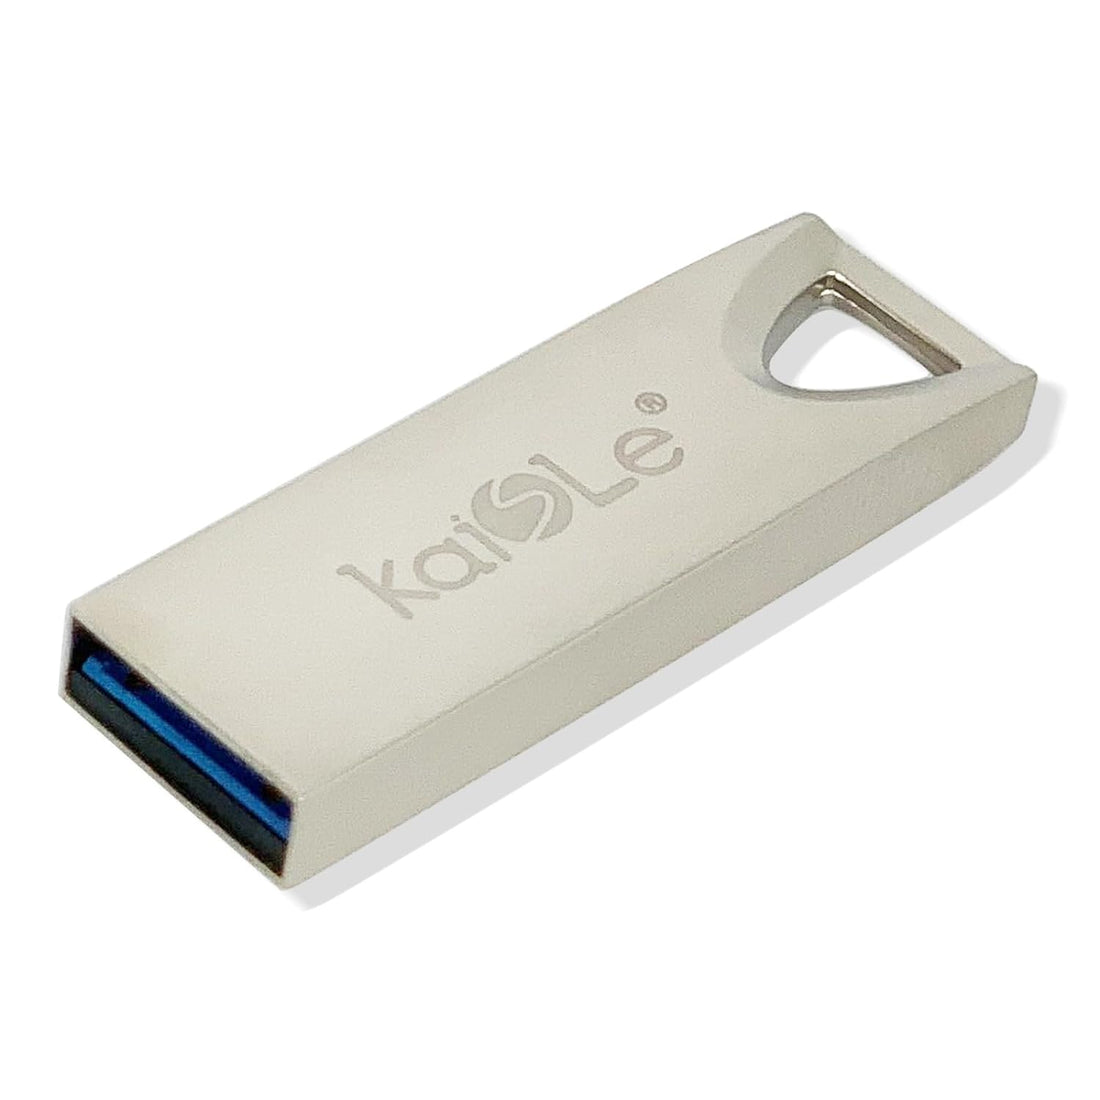 KAISLE 32GB USB Thumb Drive USB 3.0 Flash Drives Pen Drive Data Storage Jump Drive USB Memory Stick